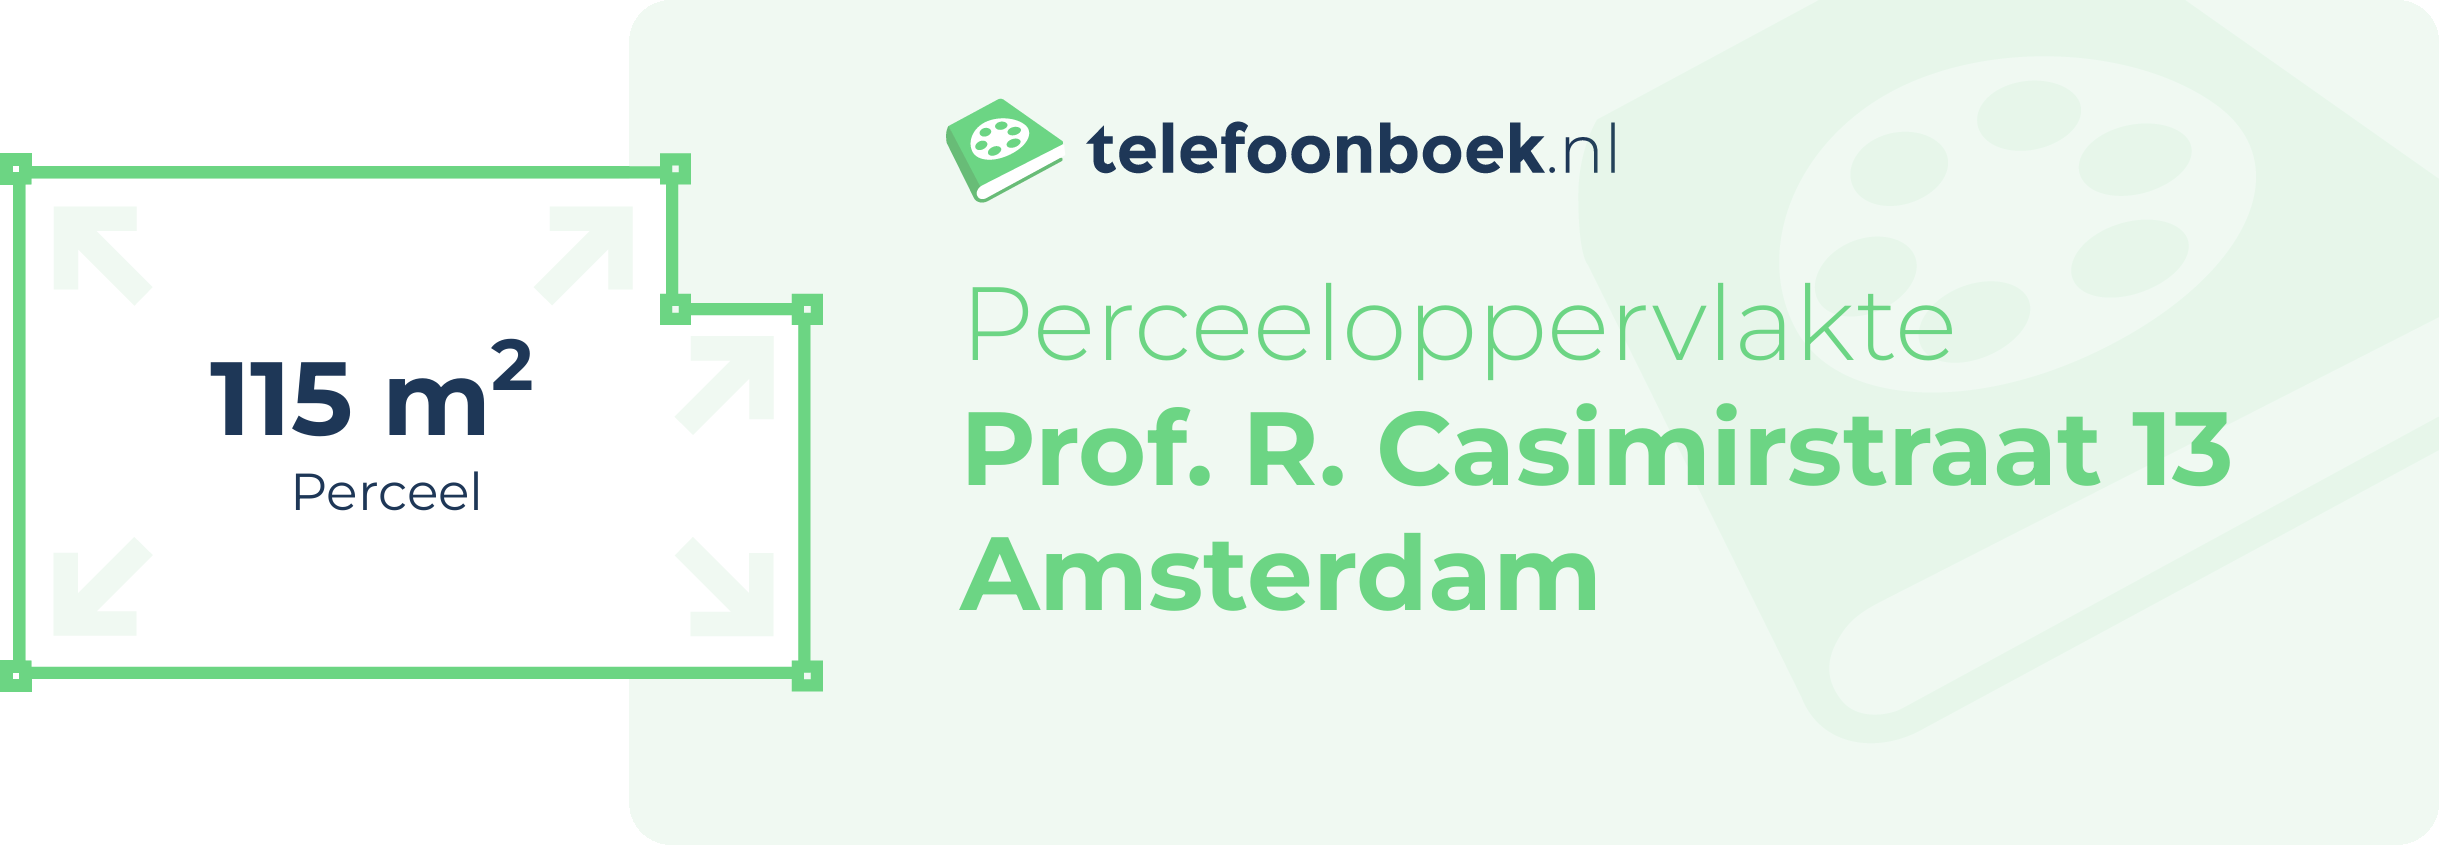 Perceeloppervlakte Prof. R. Casimirstraat 13 Amsterdam